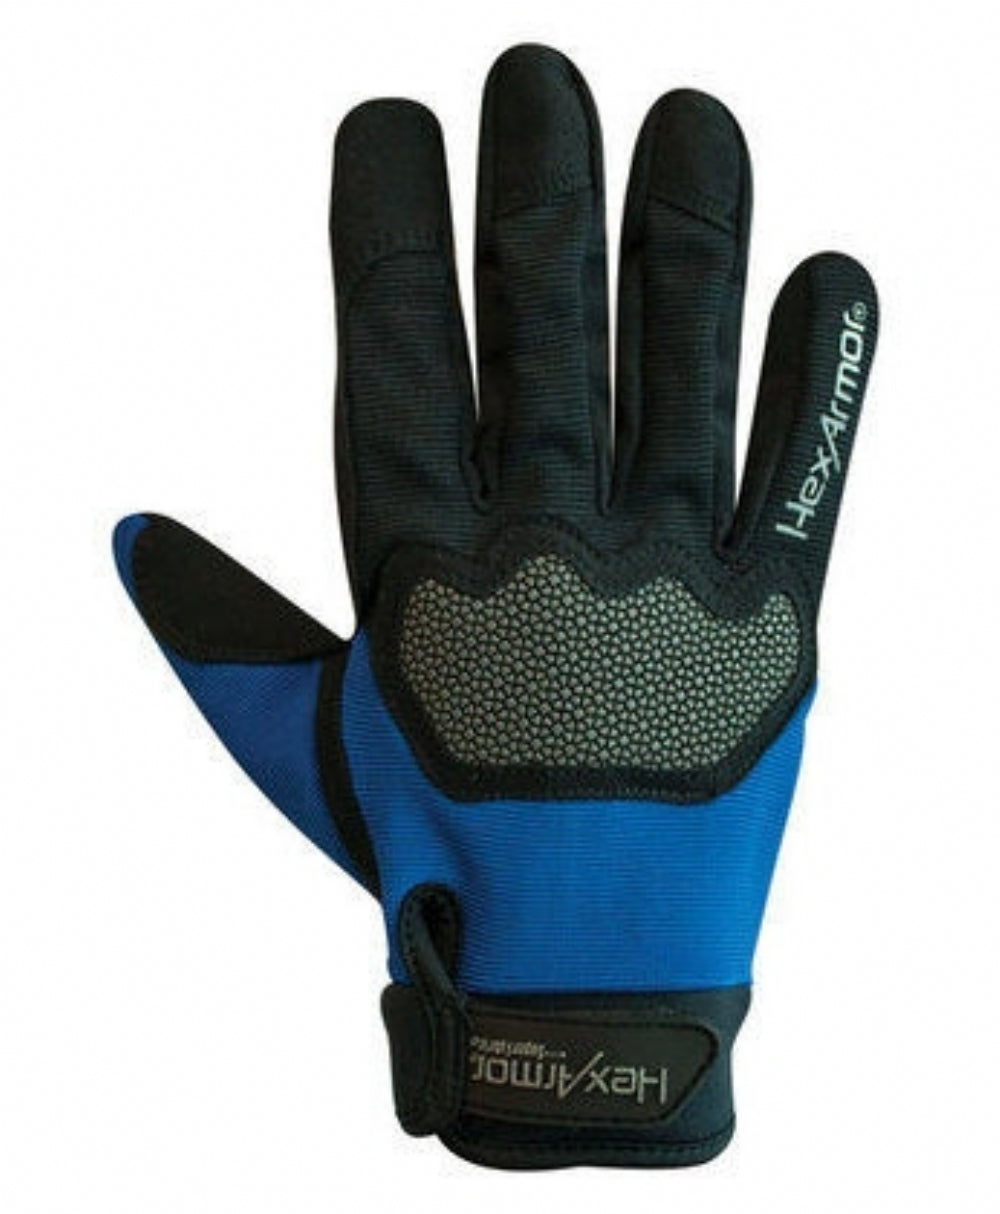 Memphis KS-5 Dupont Kevlar Steel Latex Gloves, 9389